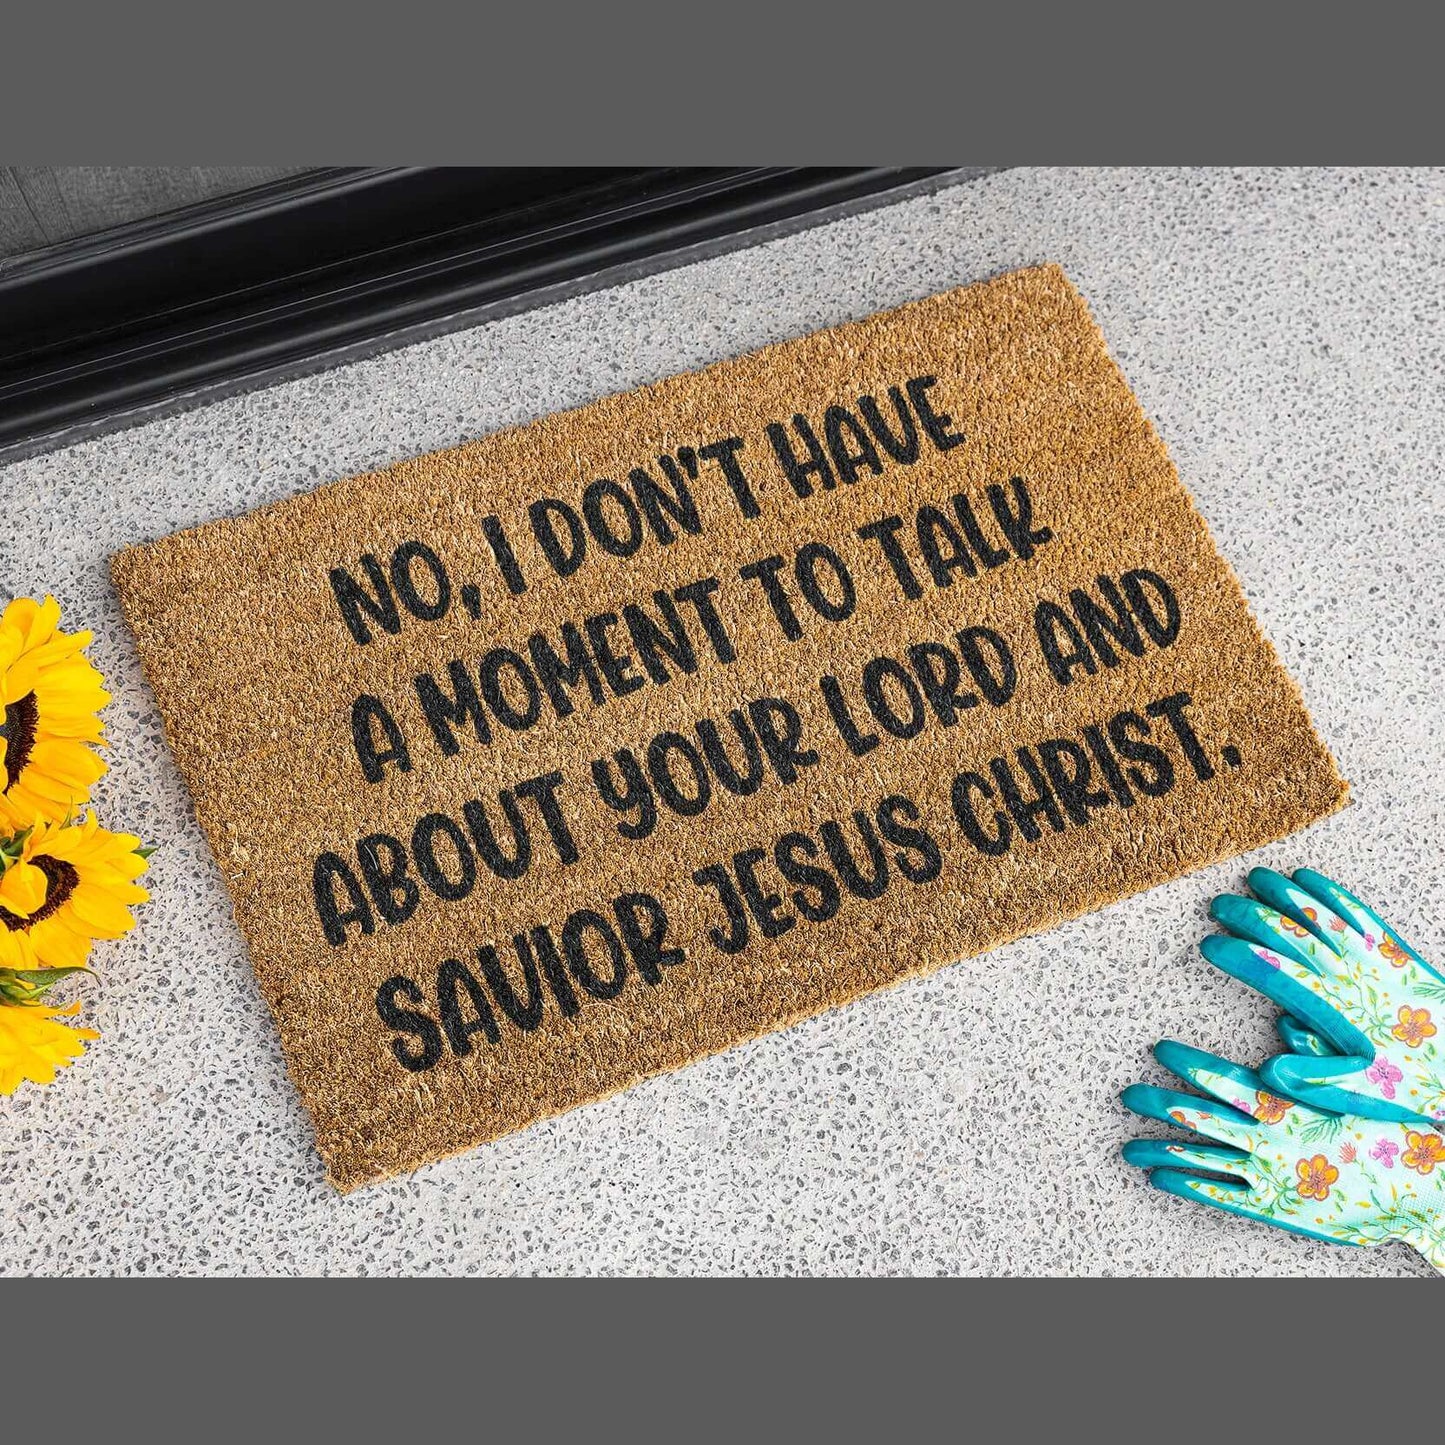 Lord and Savior Jesus Christ funny doormat.